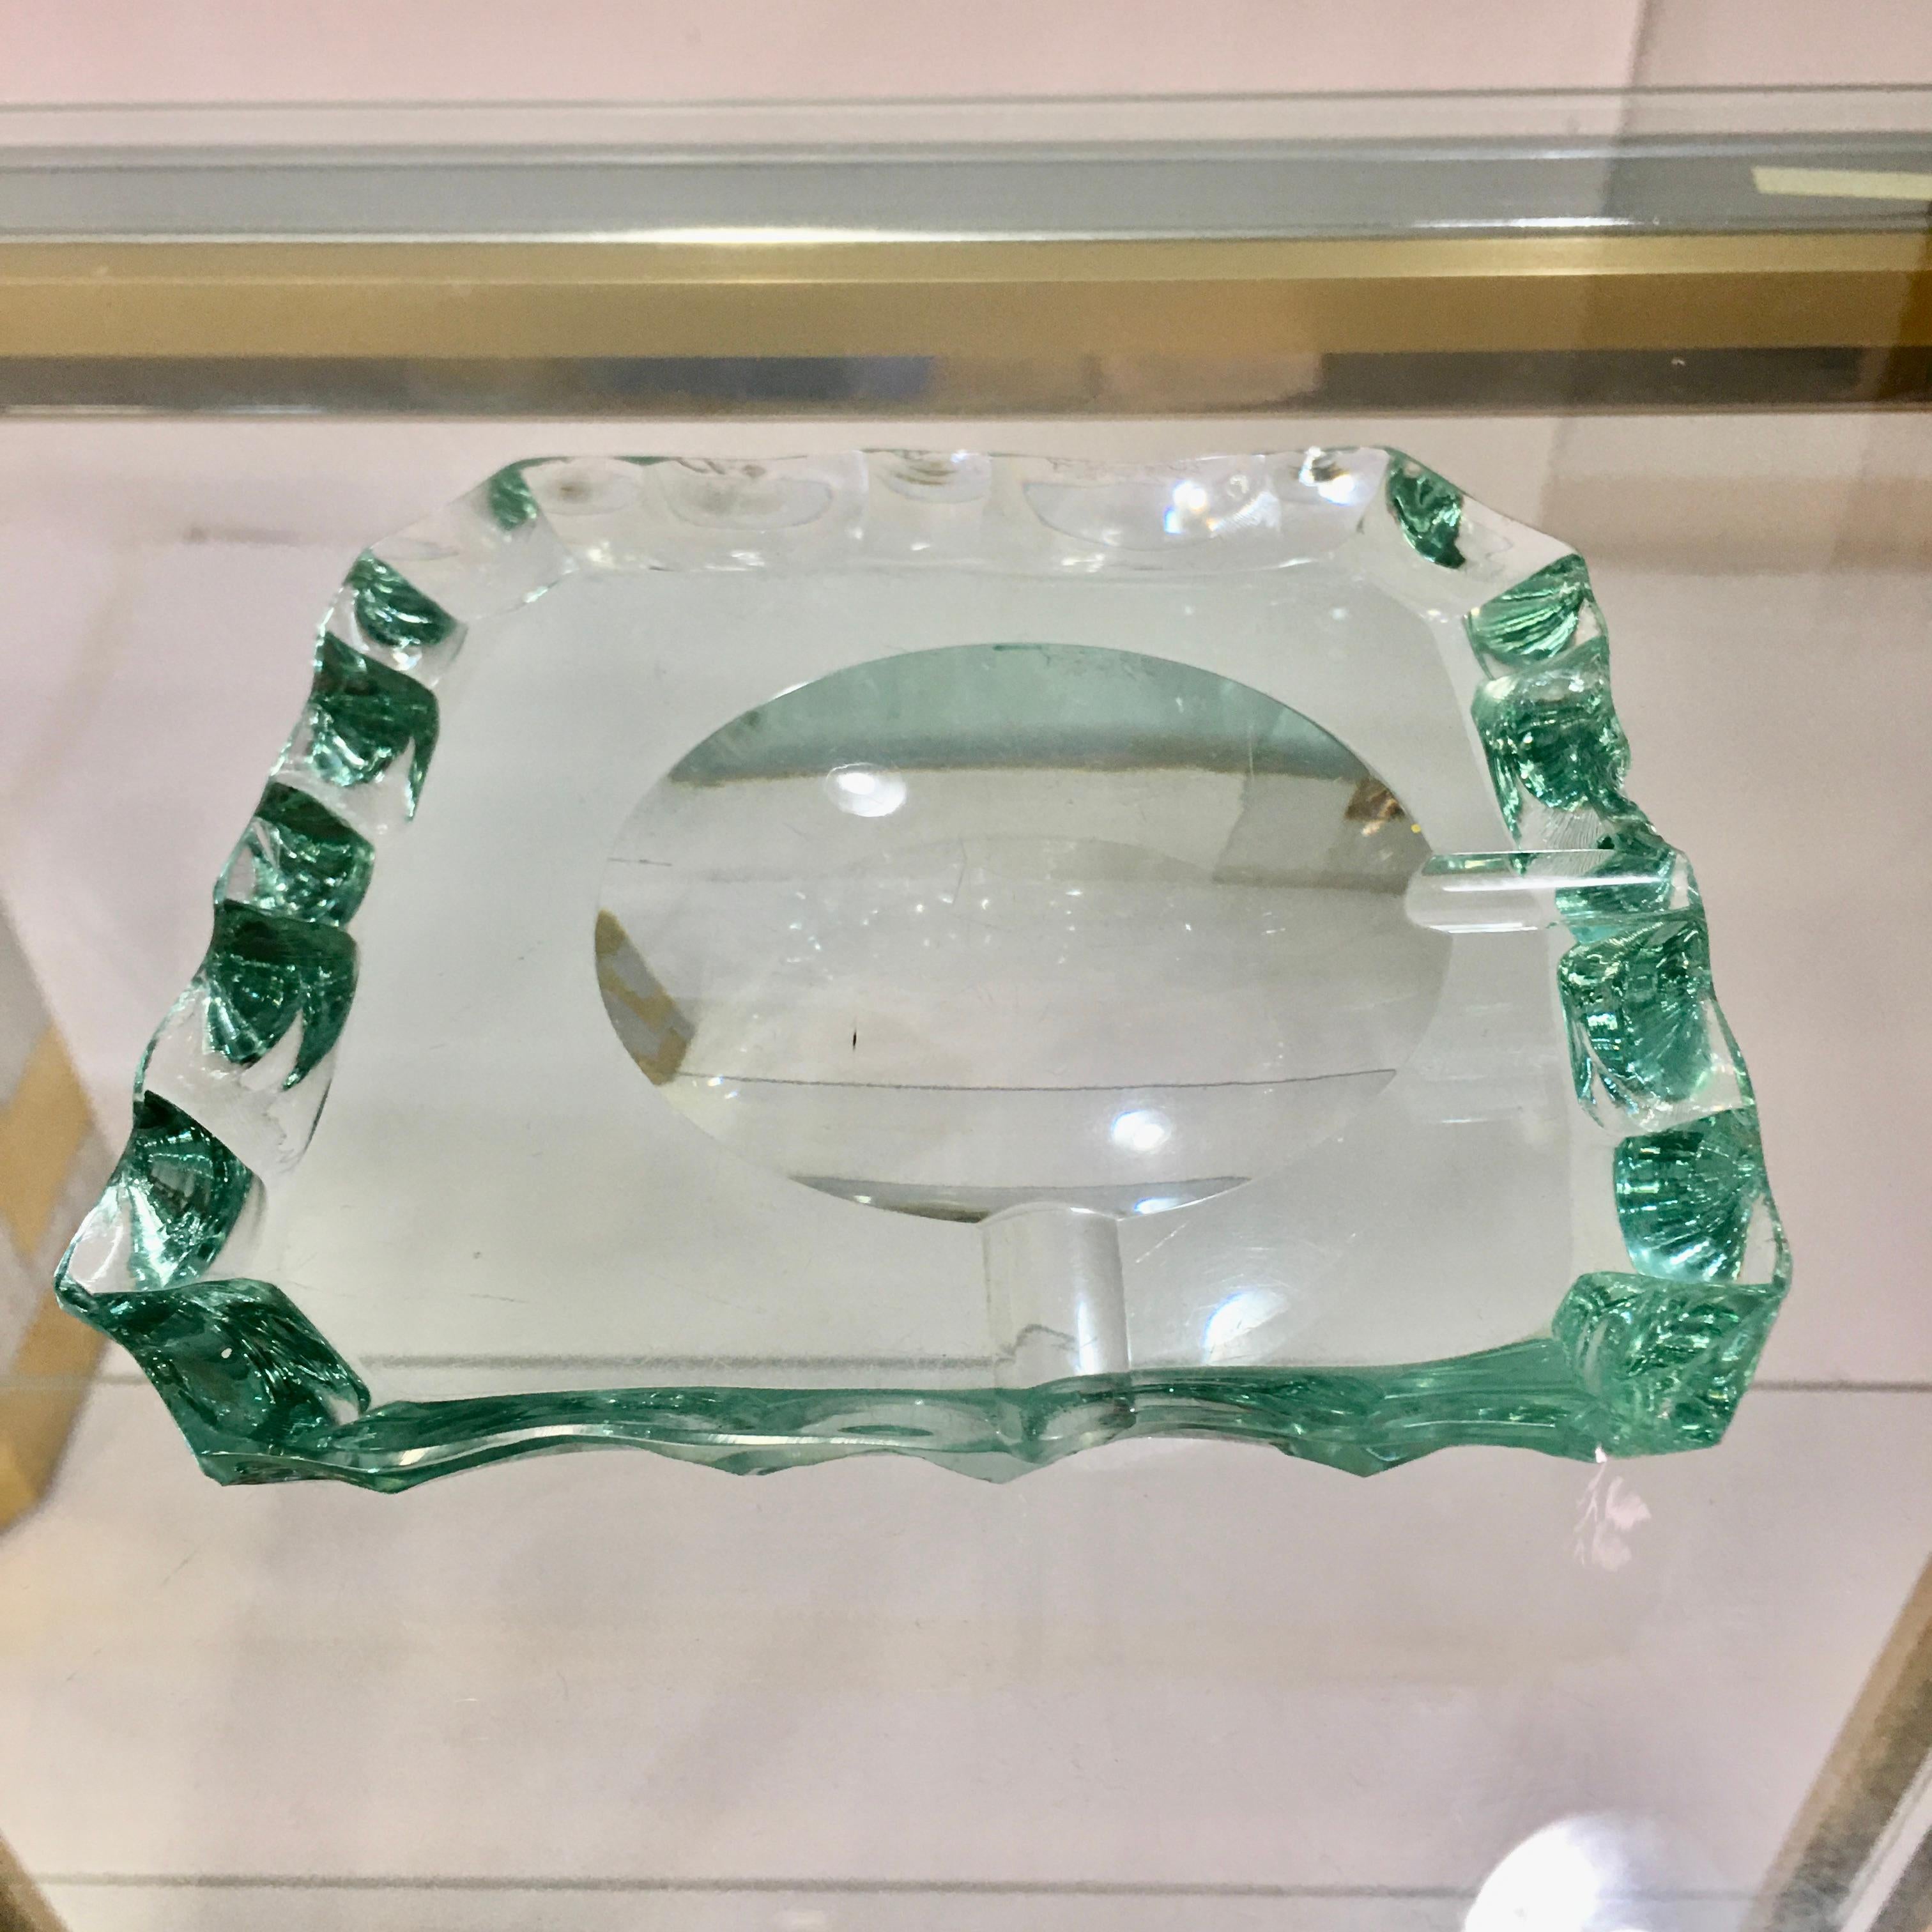 Scalloped edge green glass crystal ashtray by Pietro Chiesa for Fontana Arte.

  

